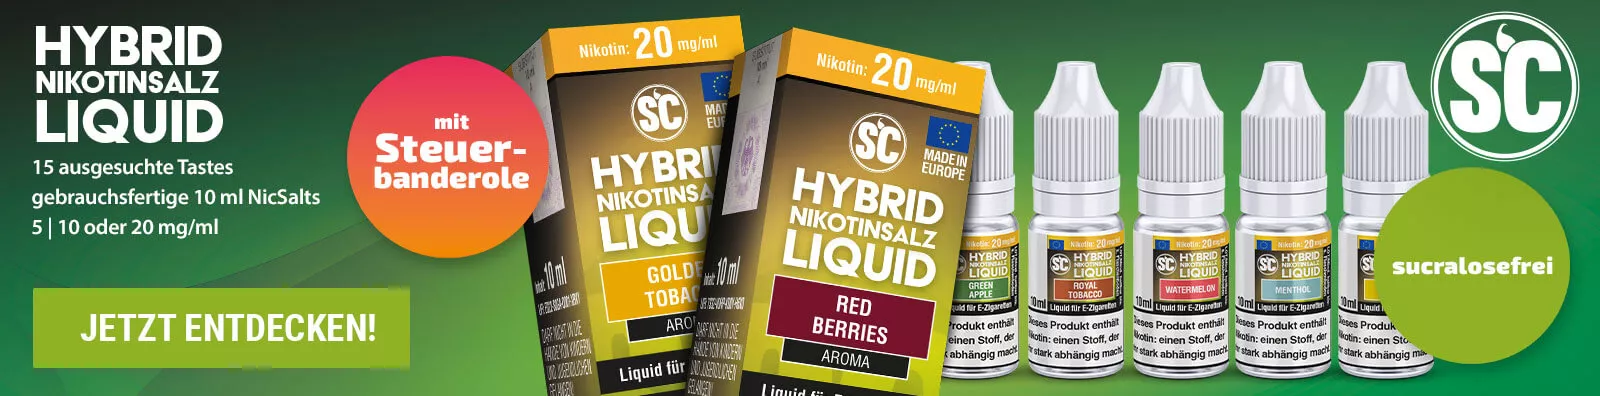 SC - Hybrid Nikotinsalz Liquid